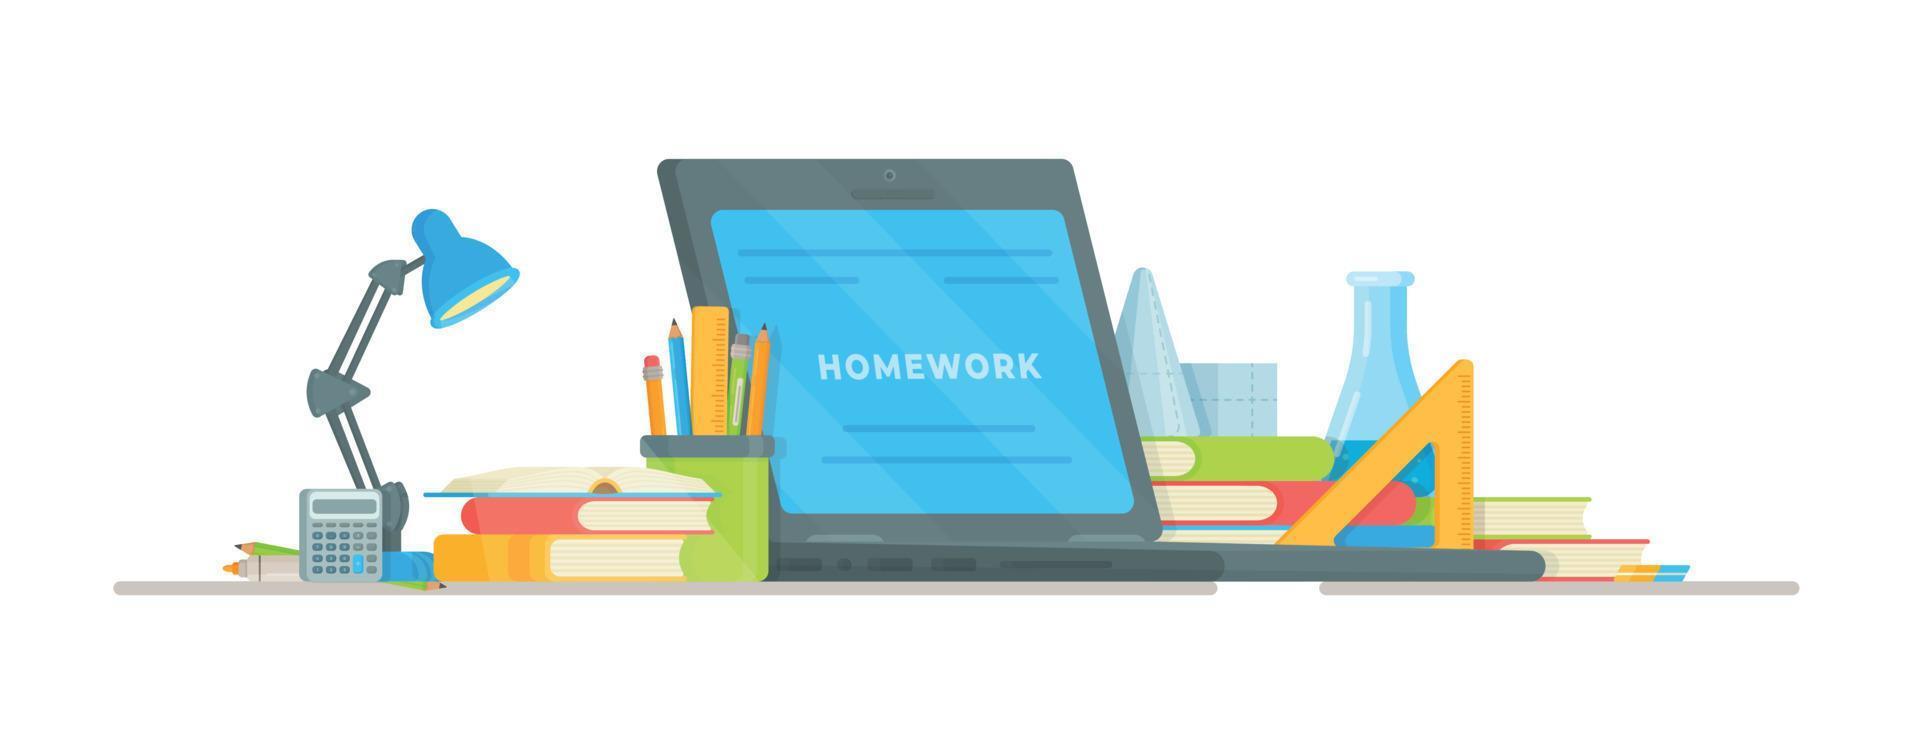 Online Learning. Vector illustration of doing homework. Each student's workspace.